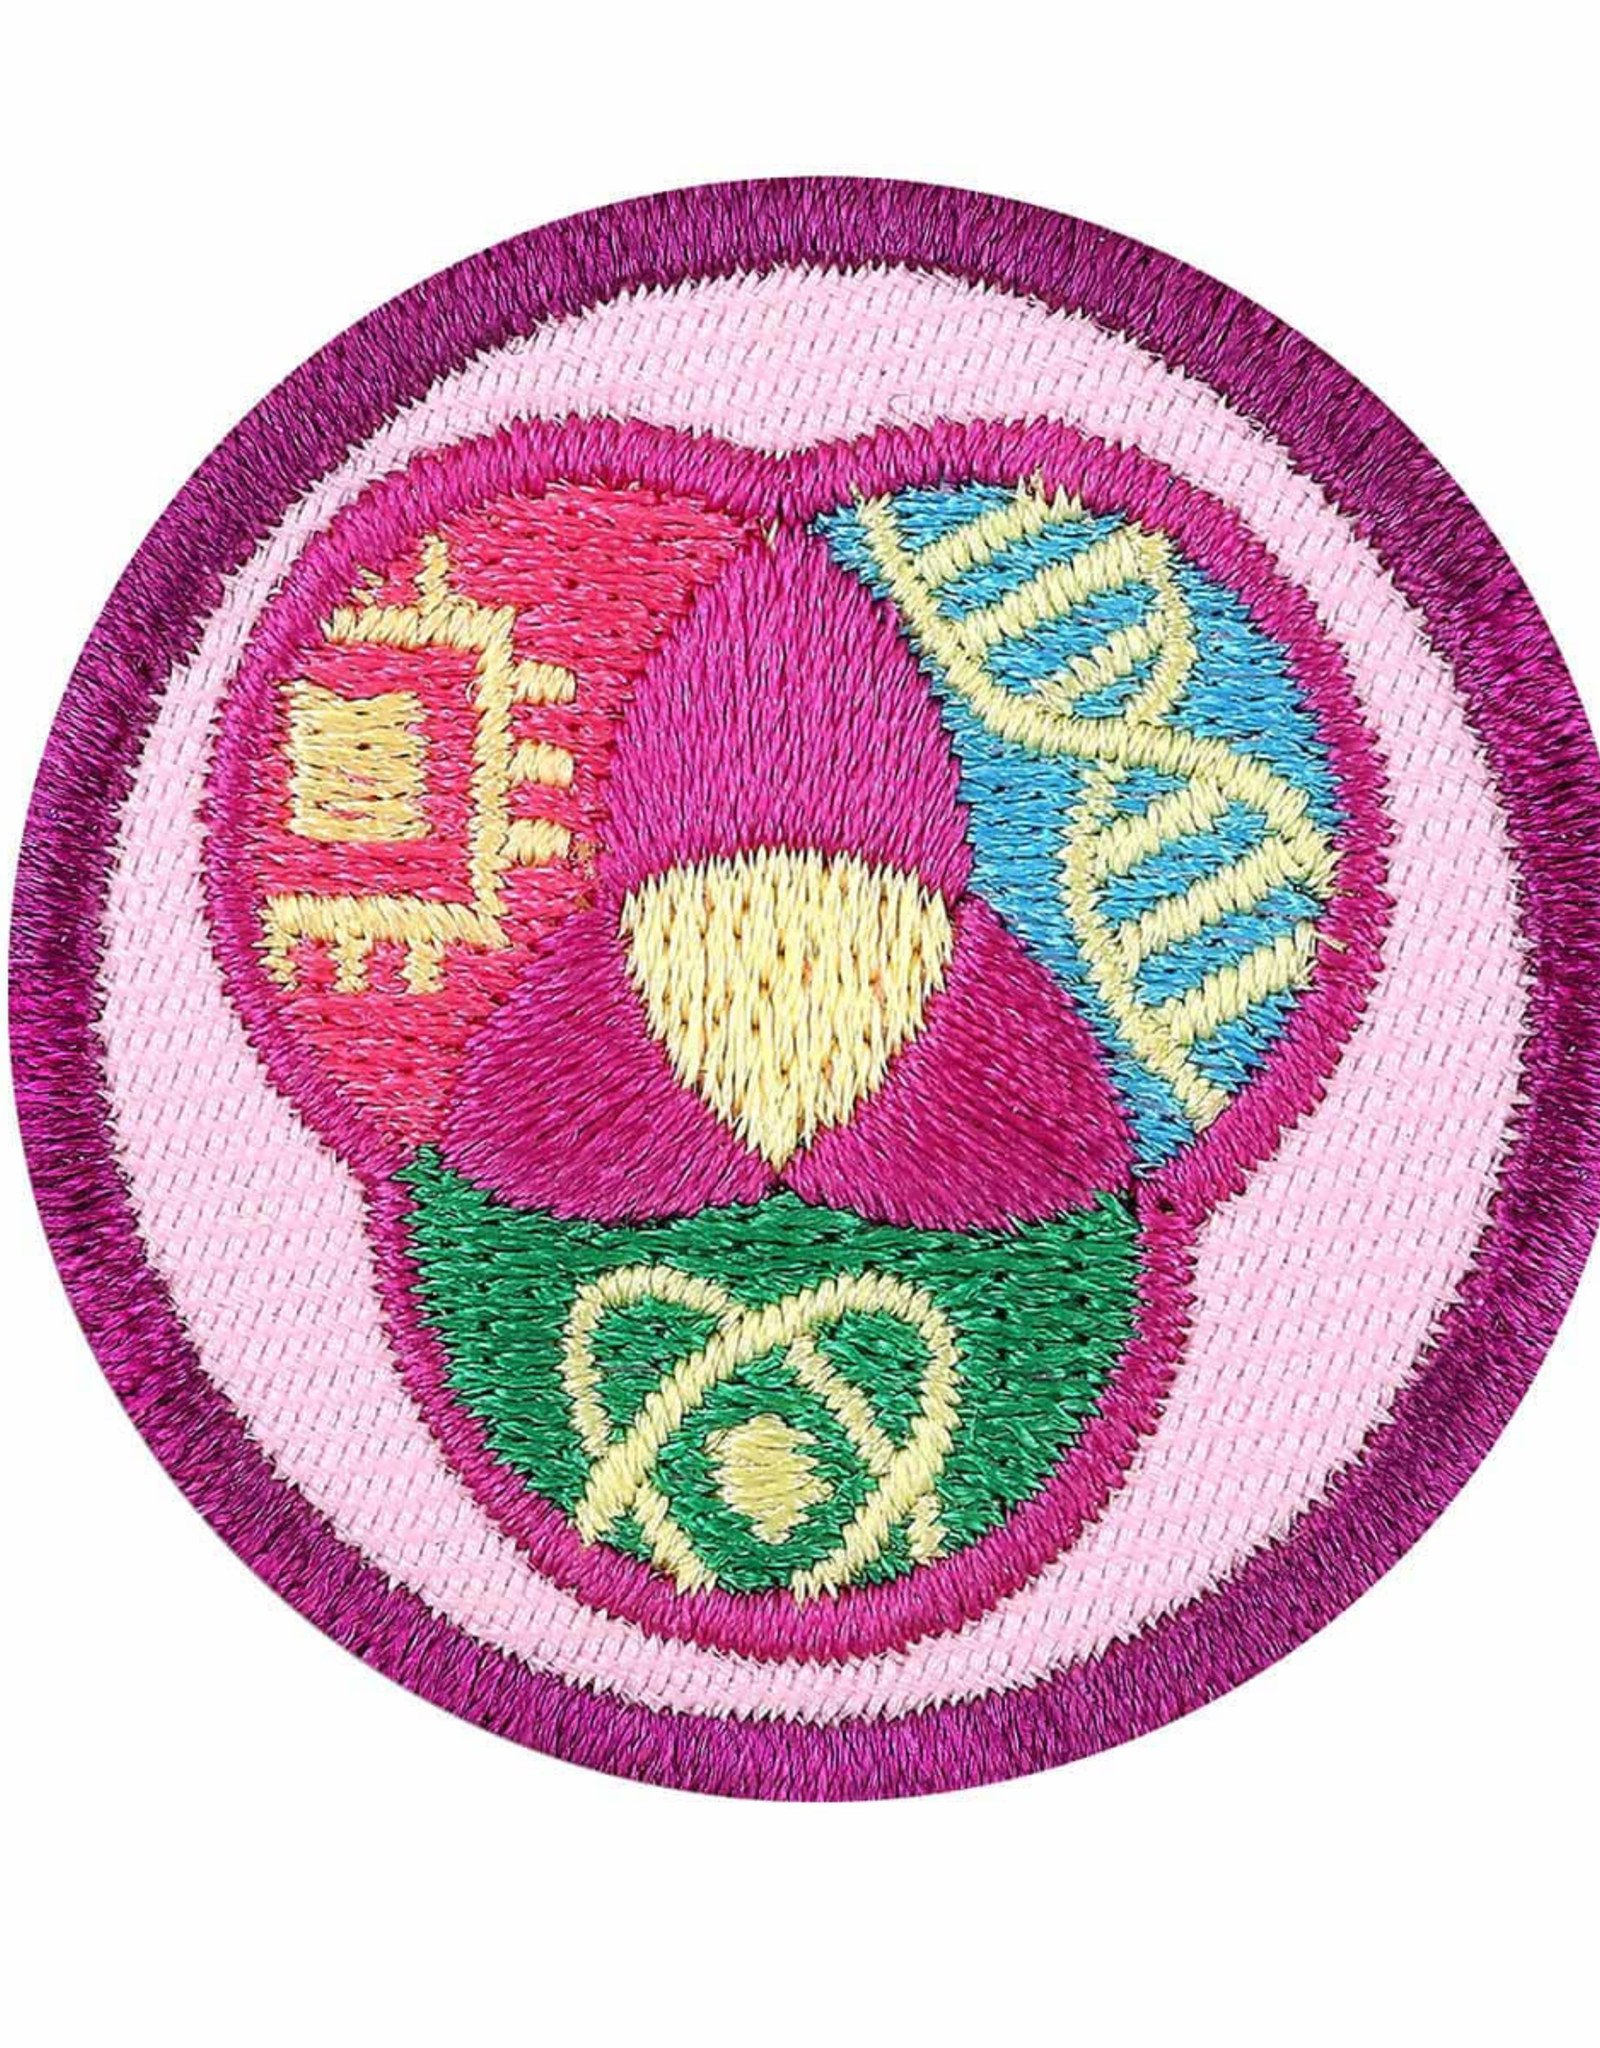 Junior STEM Career Exploration Badge - Girl Scouts of Silver Sage ...